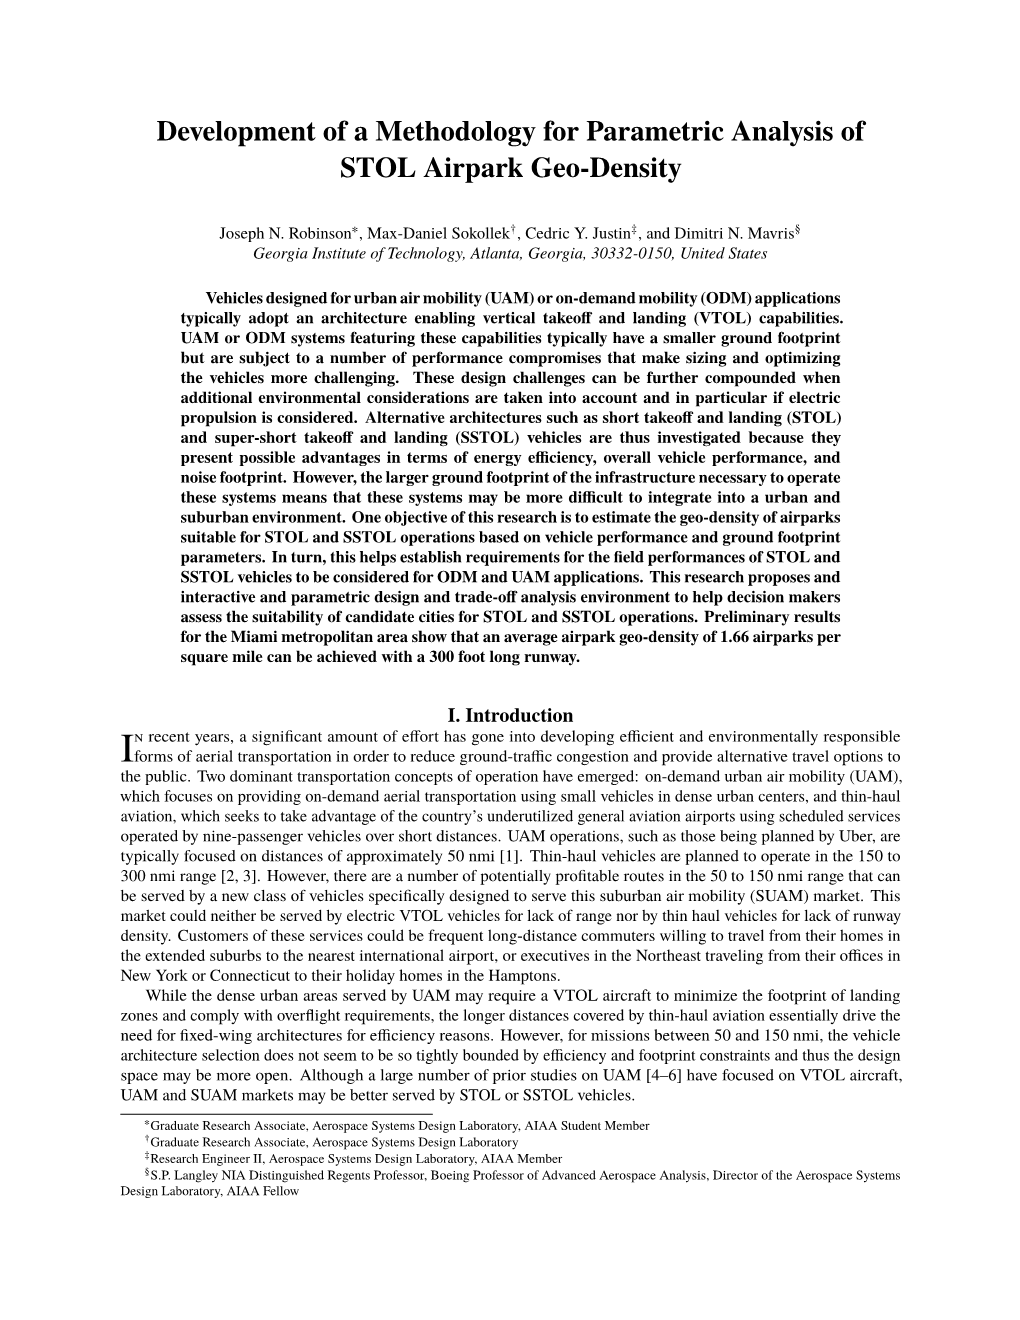 Development of a Methodology for Parametric Analysis of STOL Airpark Geo-Density